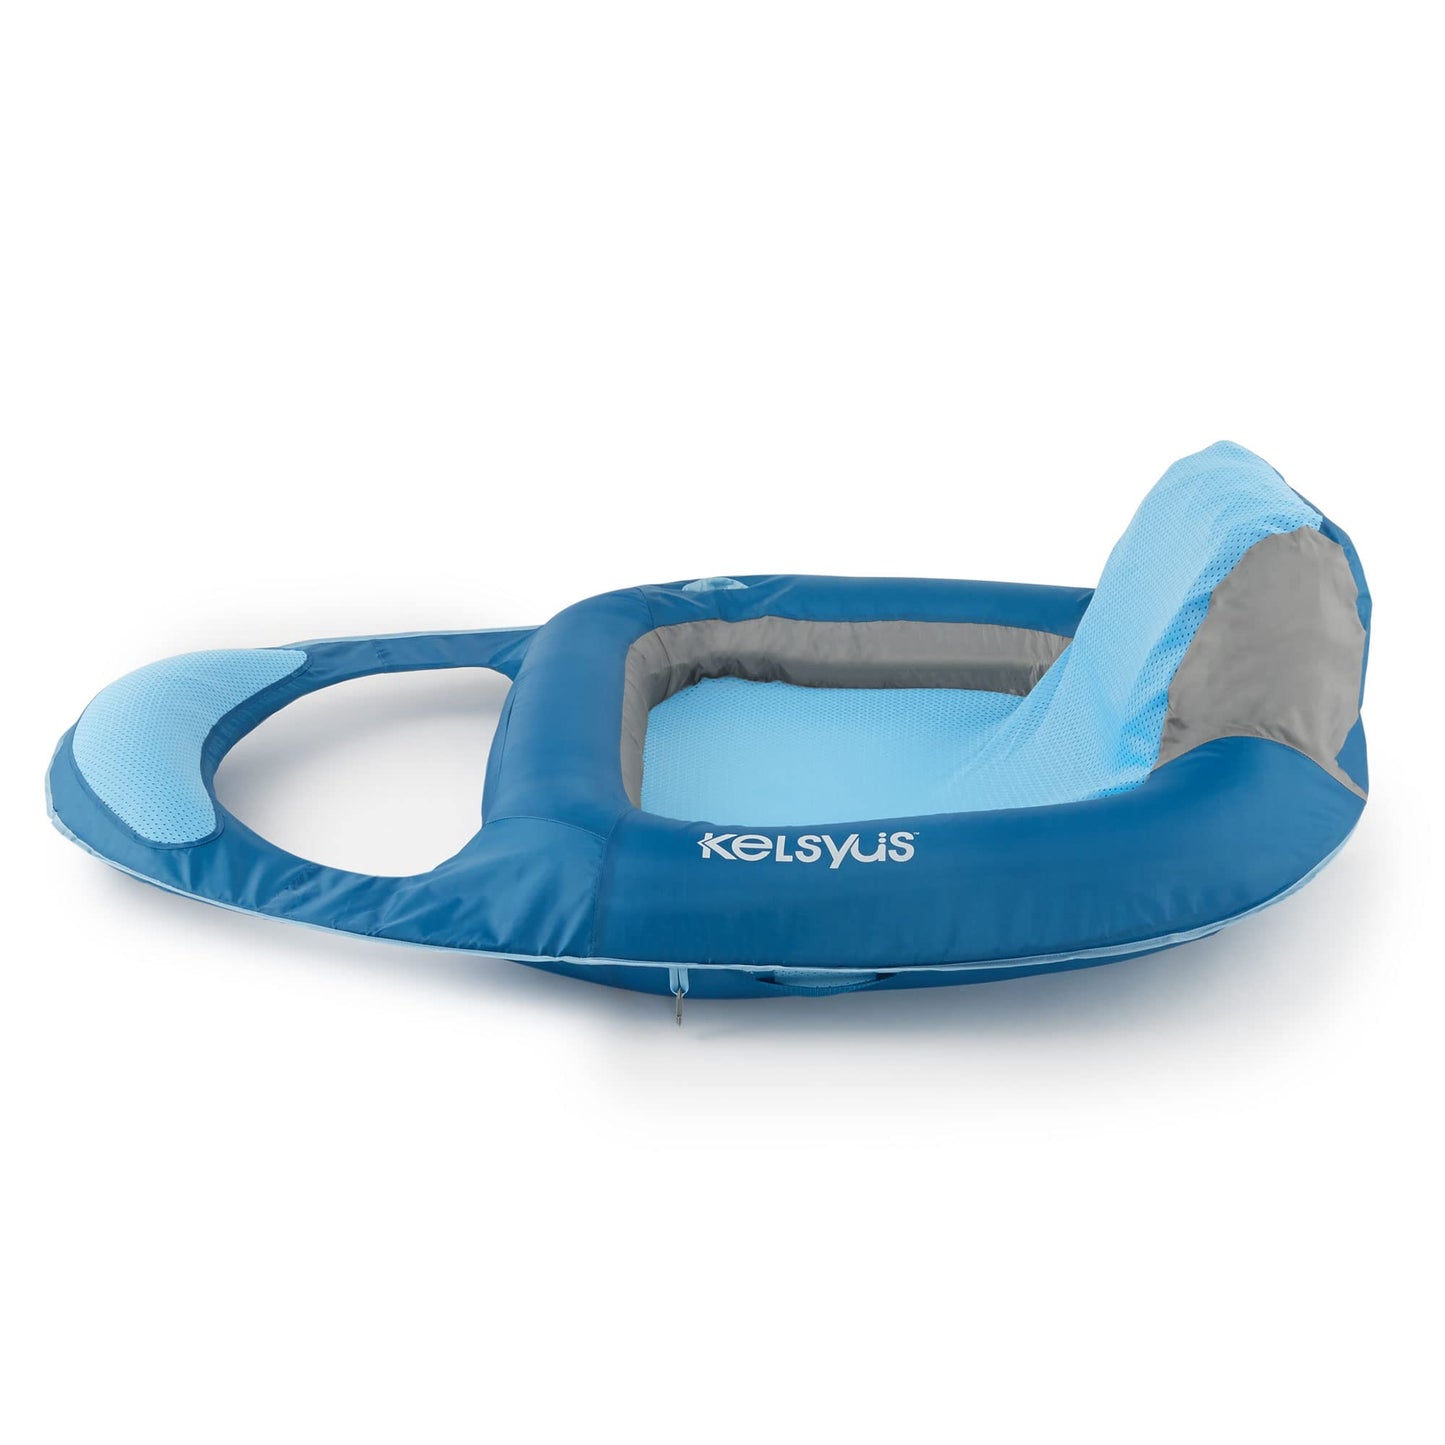 Kelsyus Spring Float Pool Lounger Chair, Light Blue Chaise